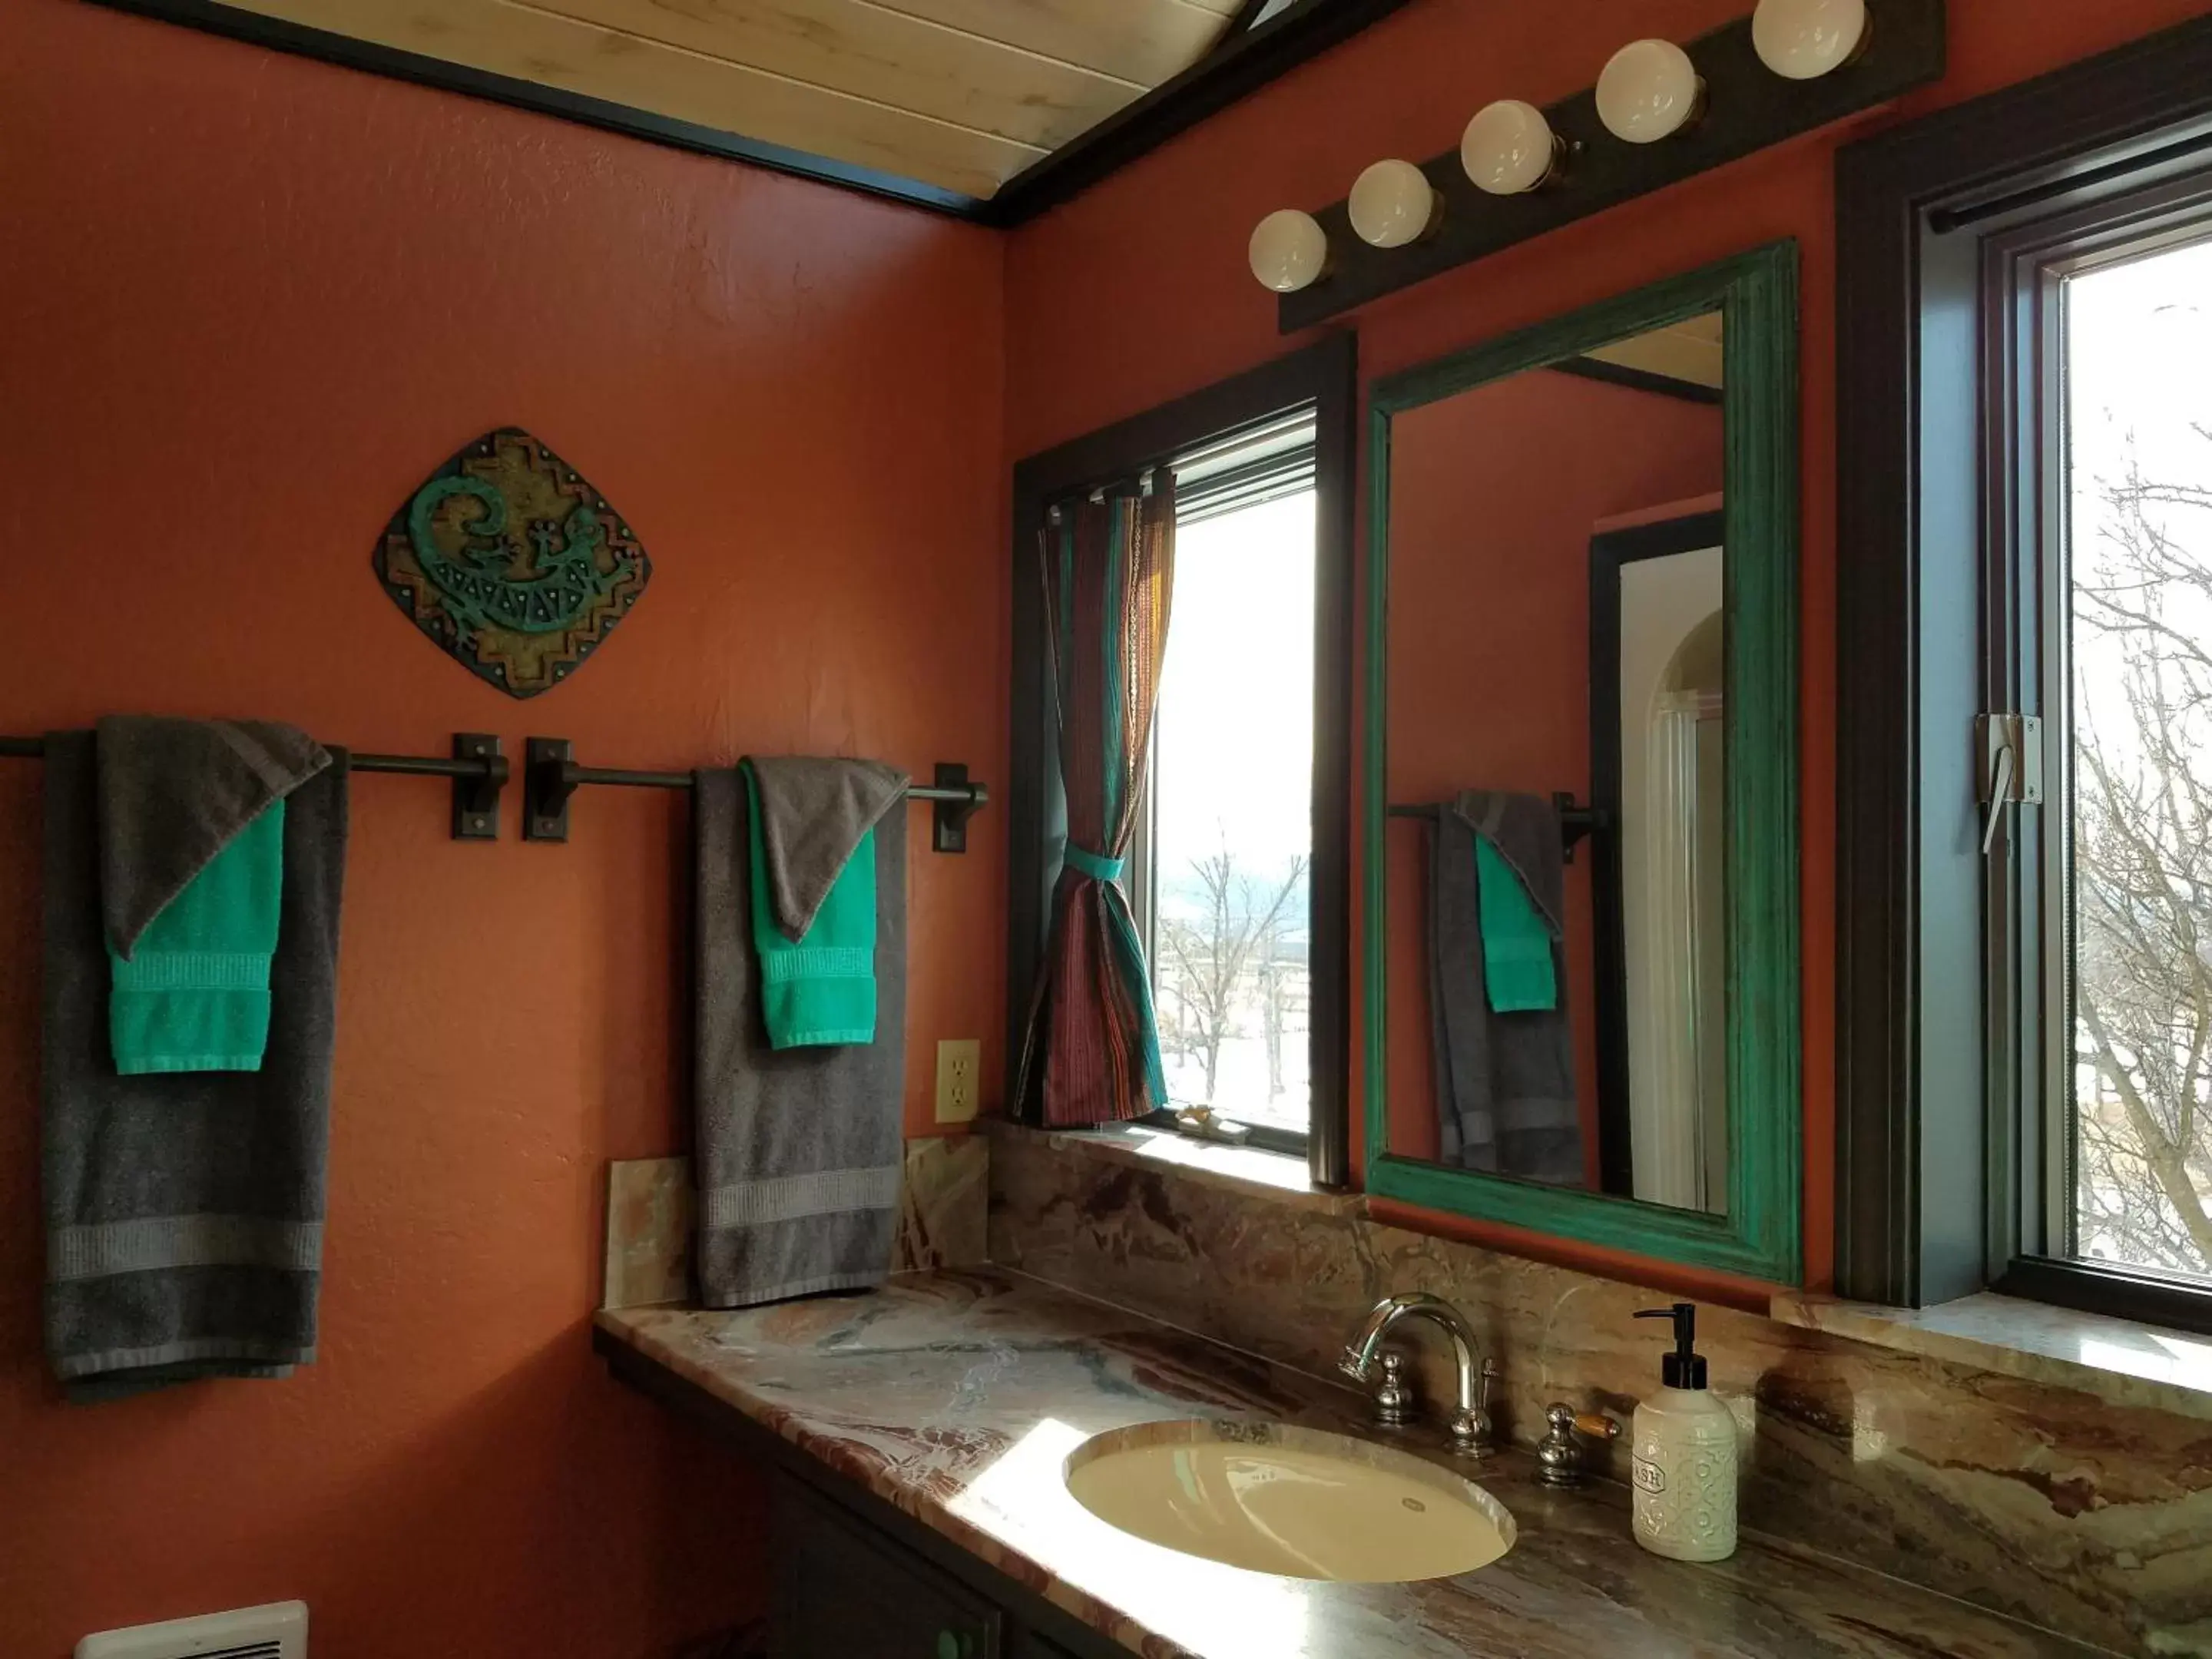 Bathroom in Starry Nights Ranch Bed & Breakfast